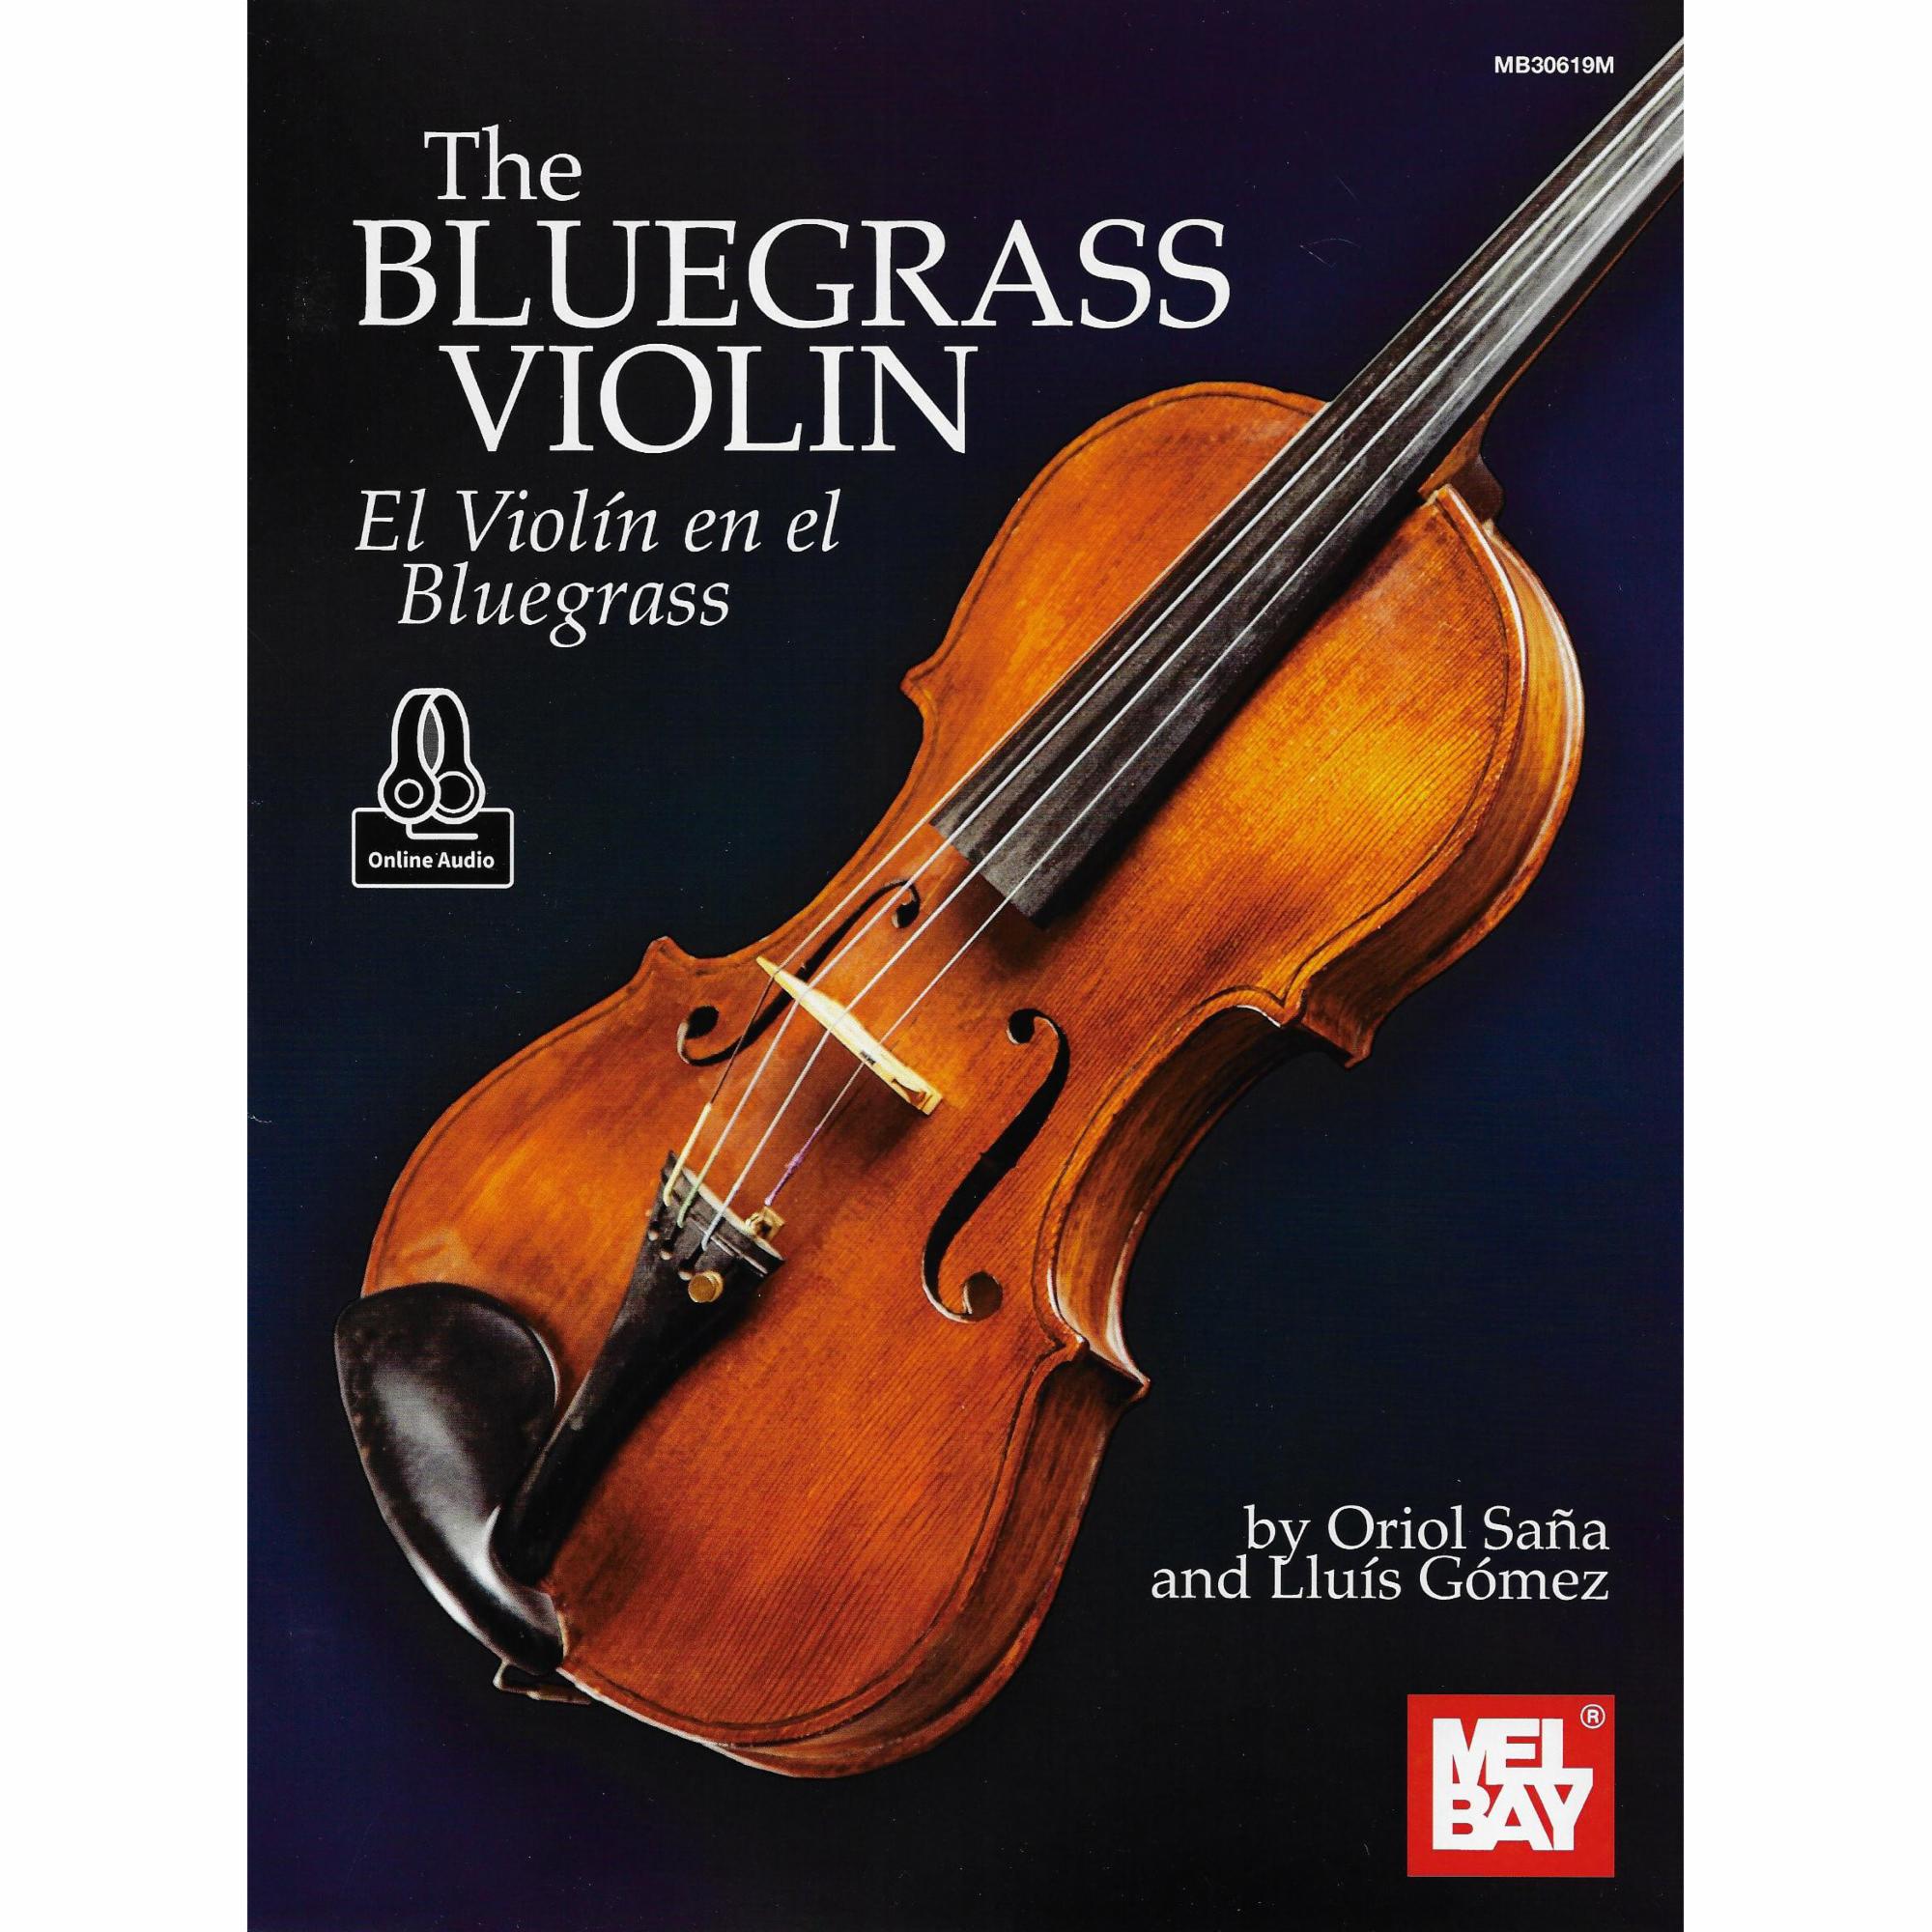 The Bluegrass Violin